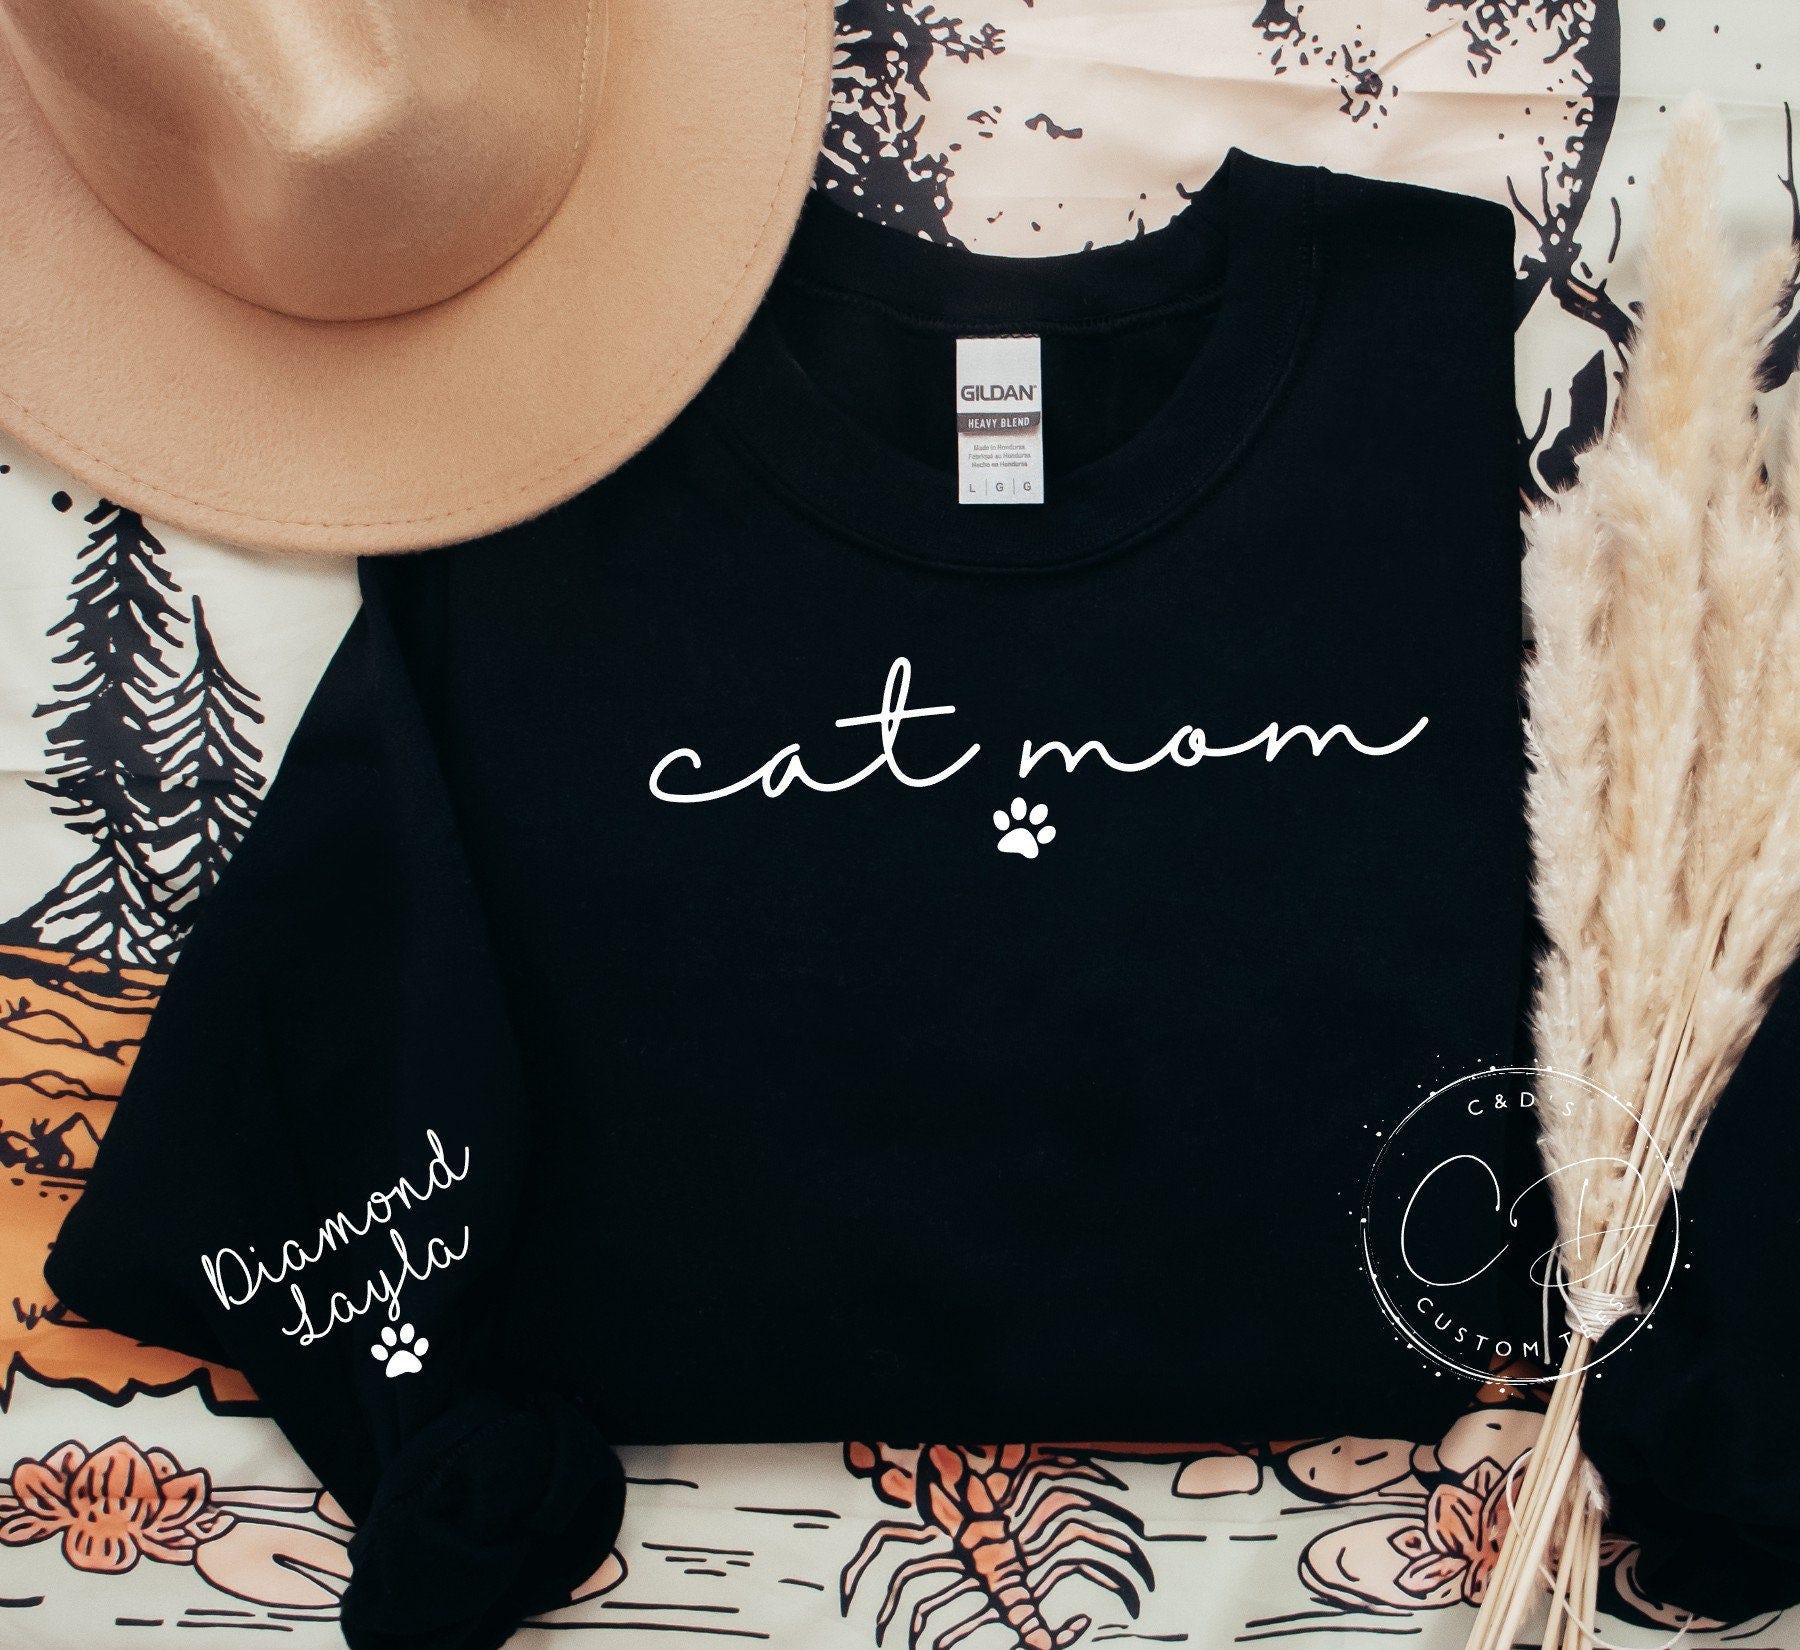 Cat Mom Sweatshirts - Custom Cat Mom Shirt - Cat Mom Shirts - Womens Sweatshirts - Cat Mom Tshirt - Cat Mom Gift - Cat Mom Tee